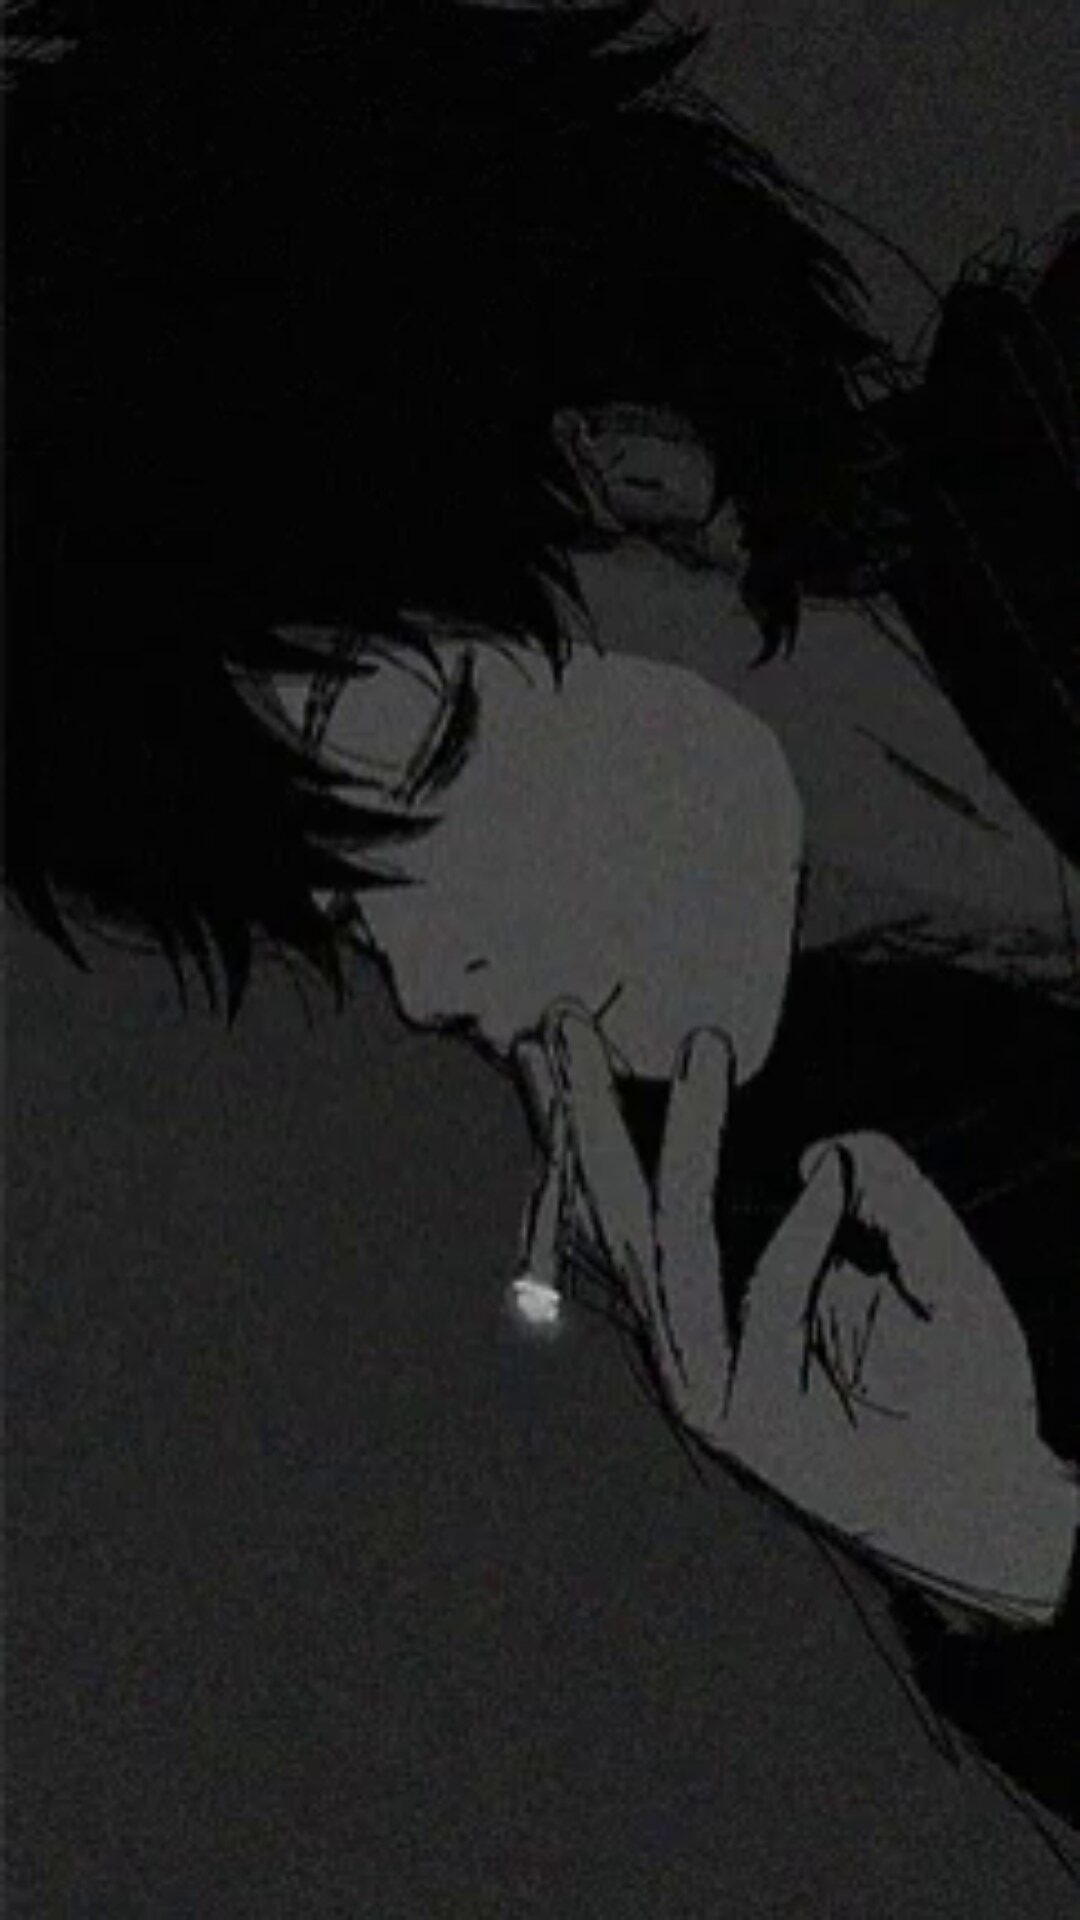 Depressed Anime iPhone Wallpaper Depressed Anime iPhone Wallpaper